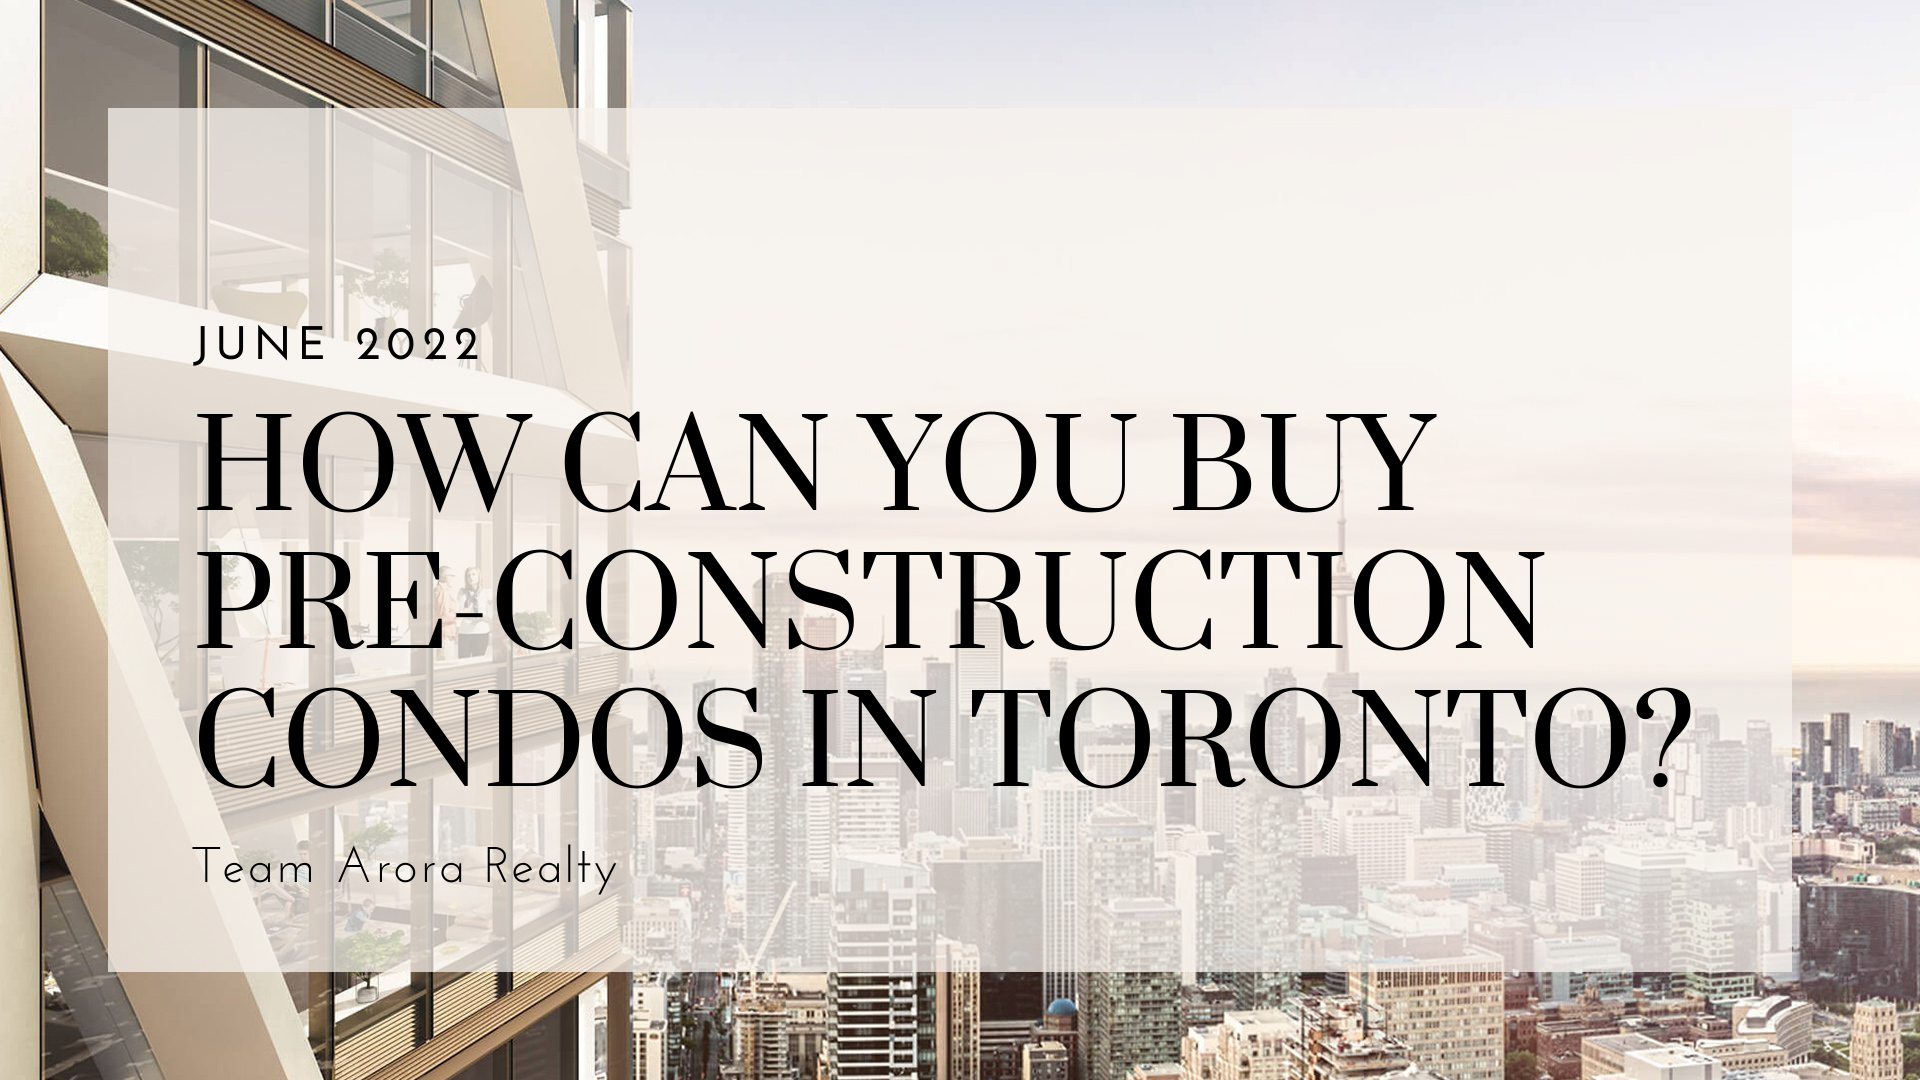 How can you buy pre-construction condos in Toronto